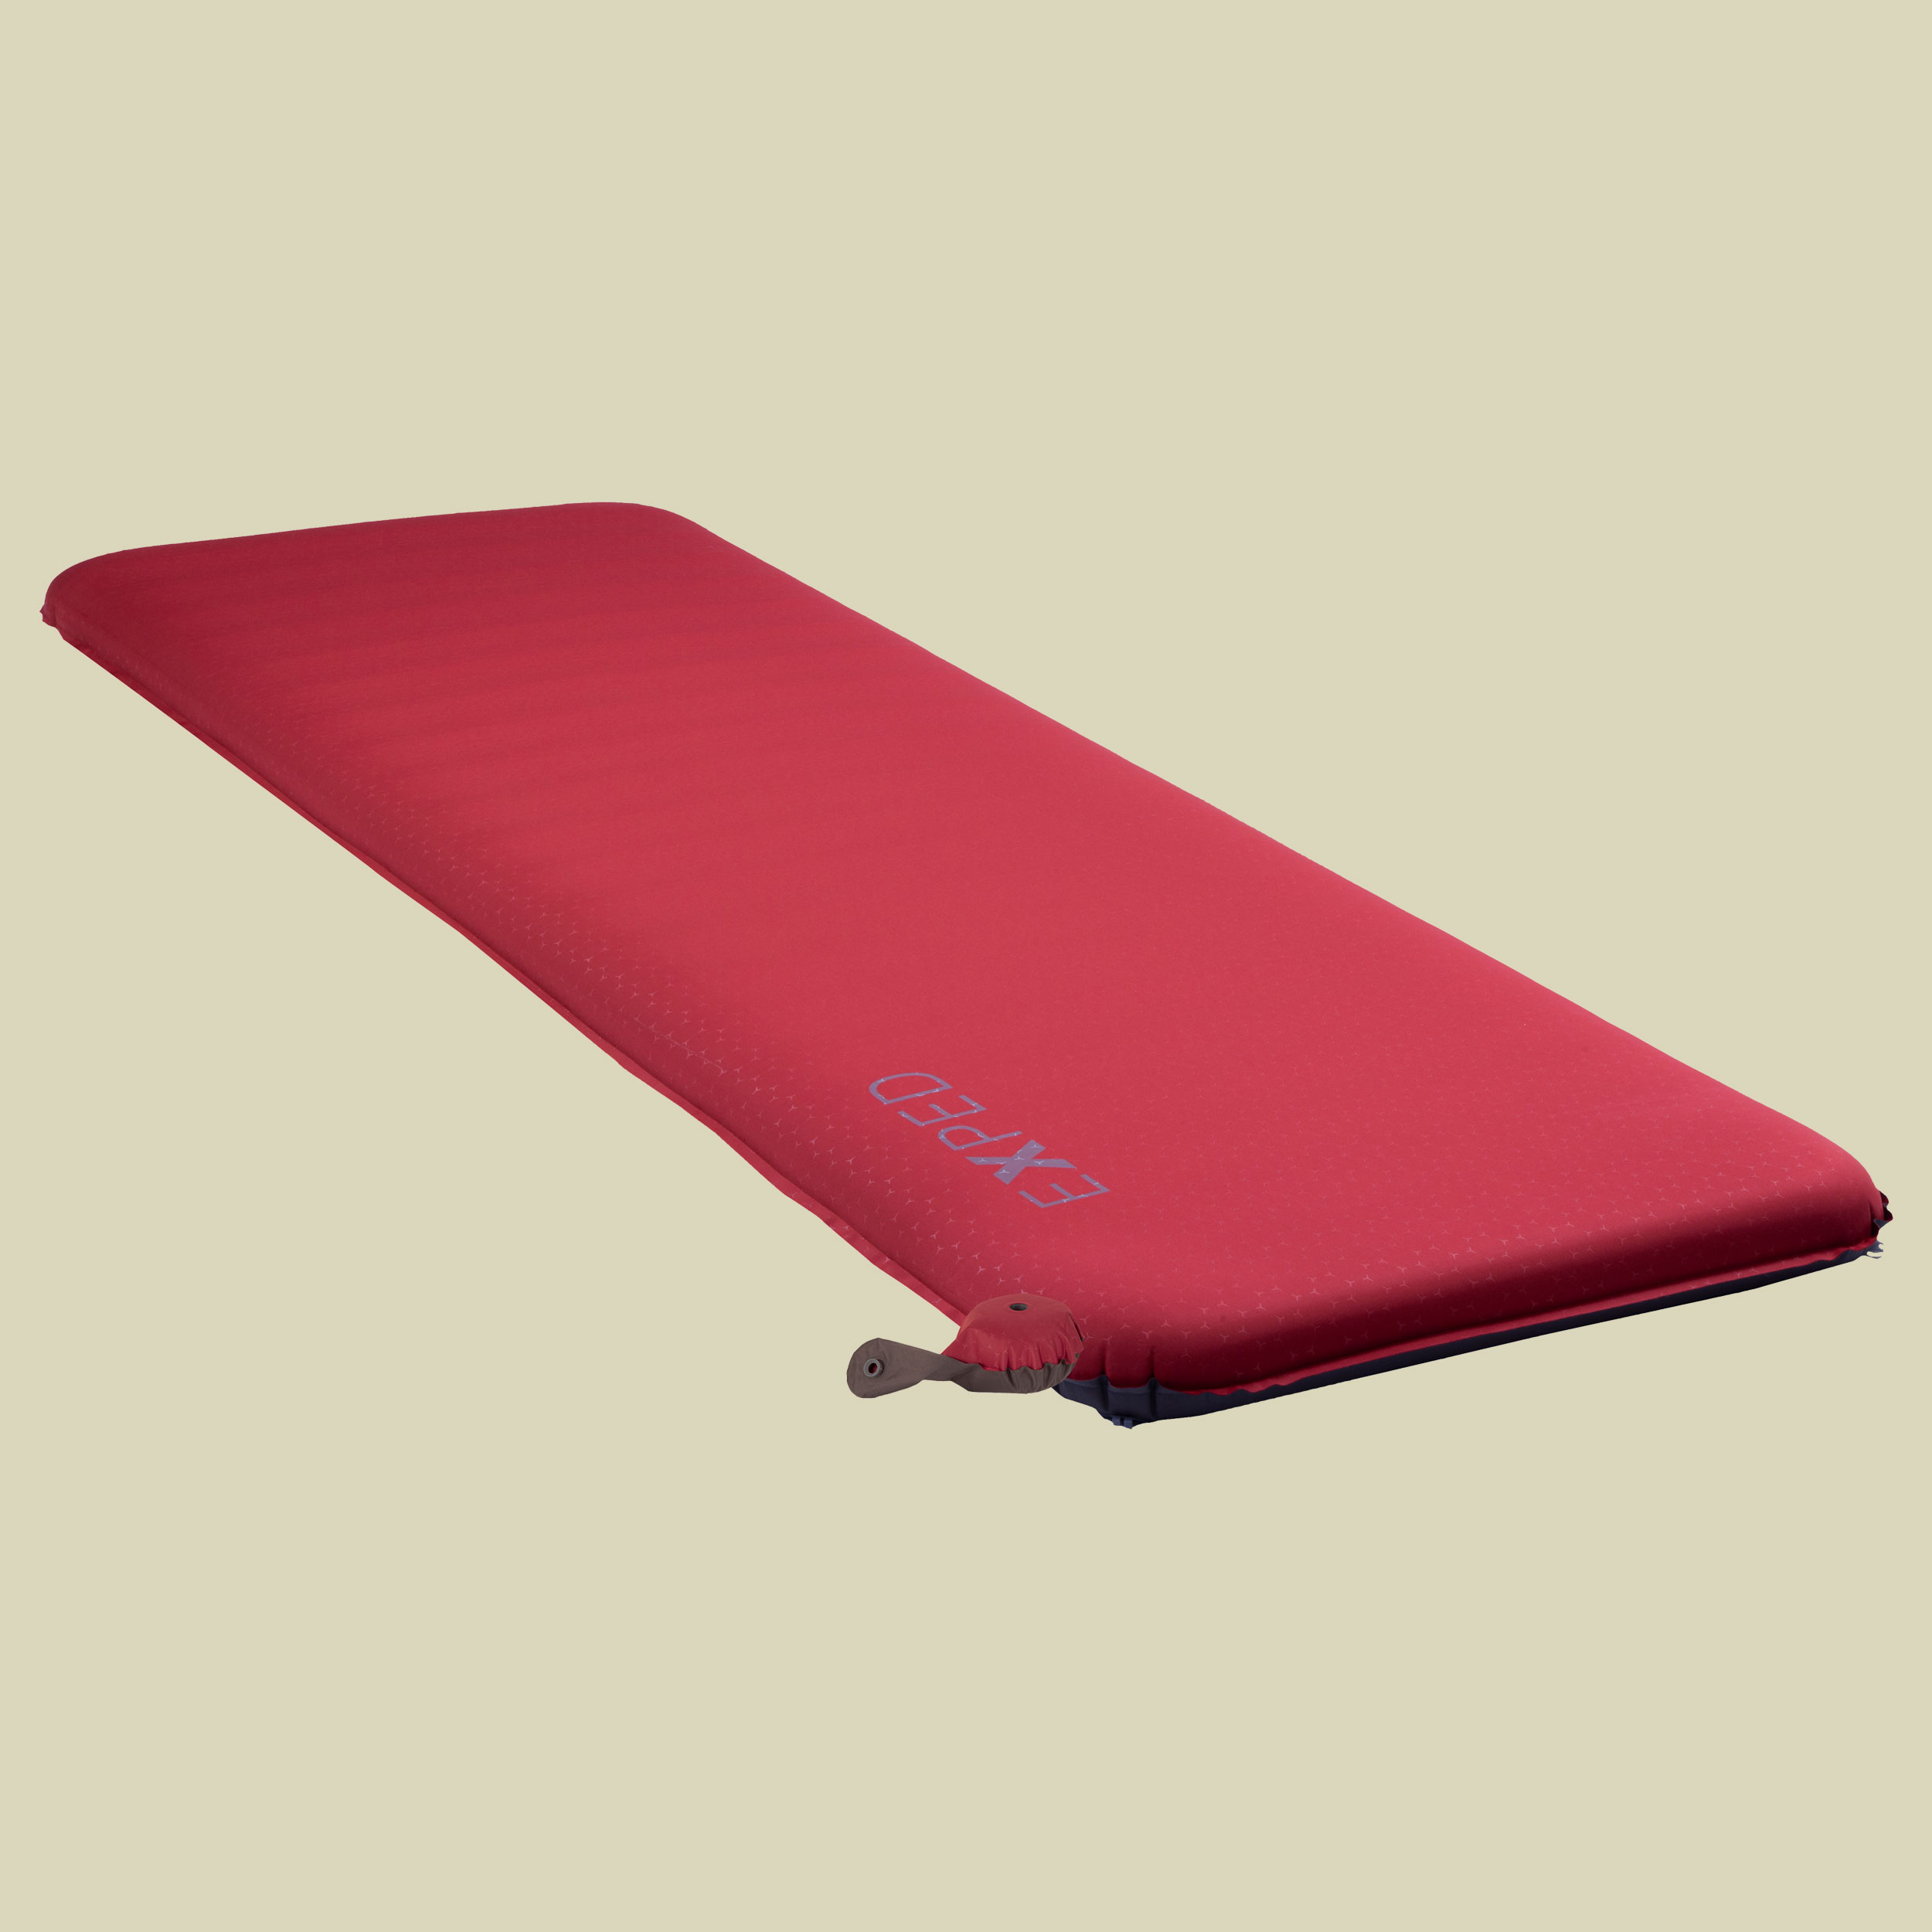 SIM Comfort 7.5 LW Maße: 197 cm x 65 cm x 7,5 cm Farbe: ruby red